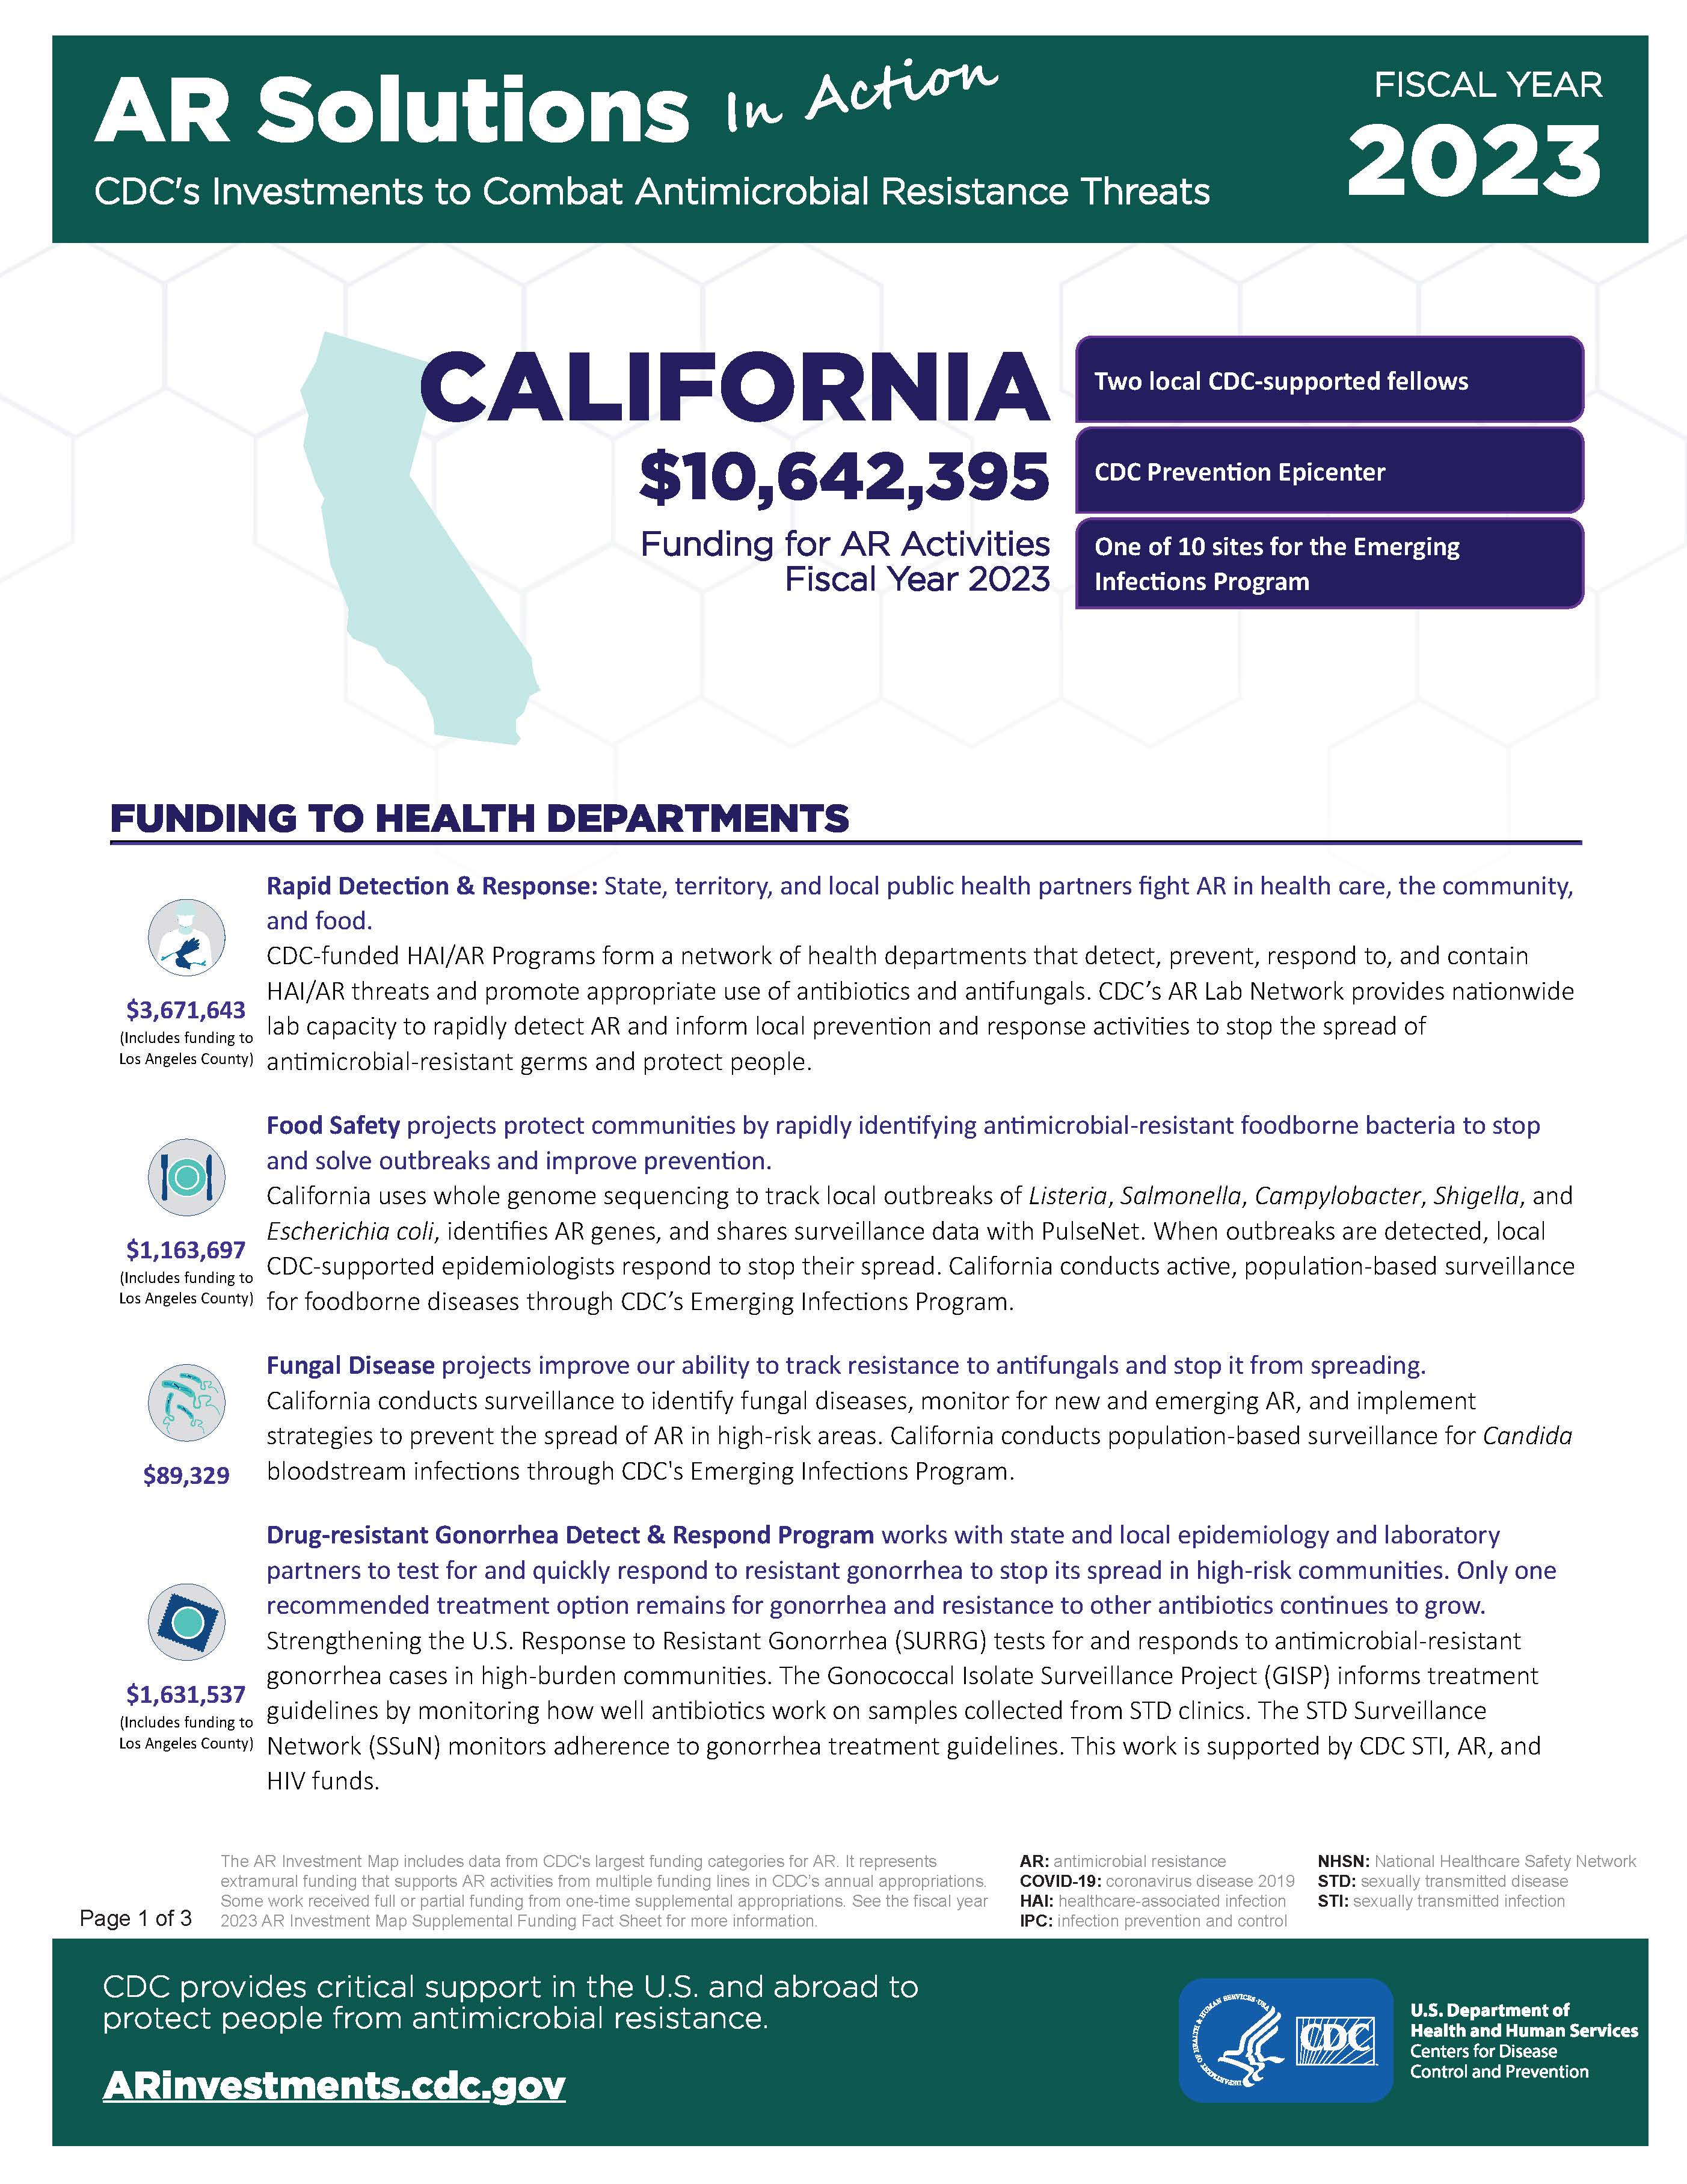 View Factsheet for California